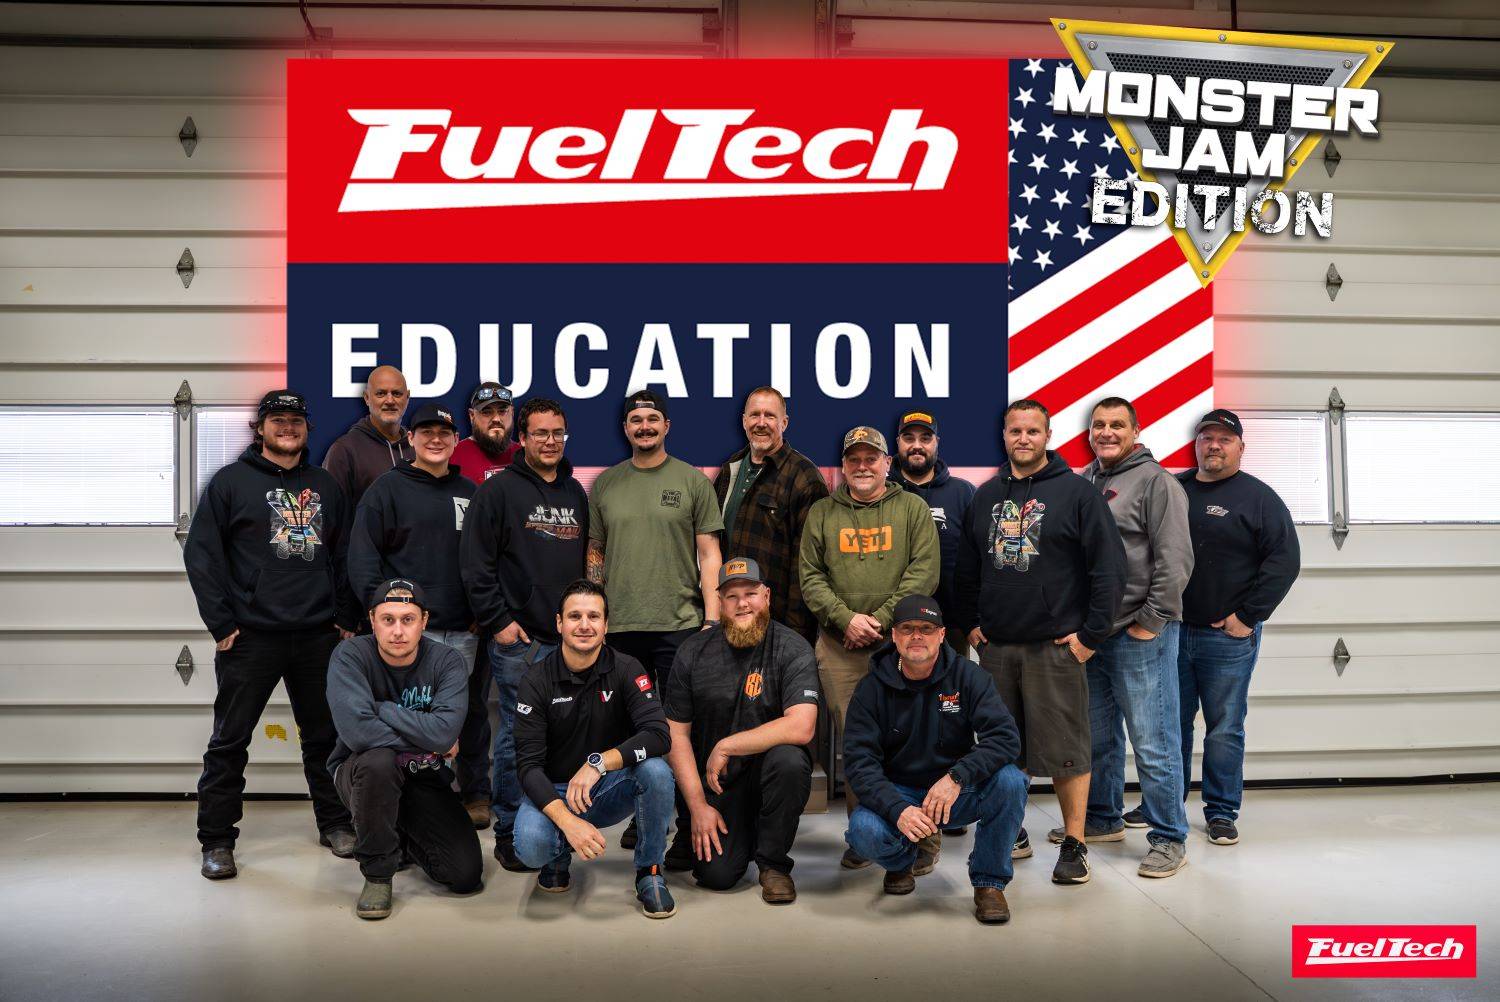 FuelTech's FT Education, Monster Jam edition!